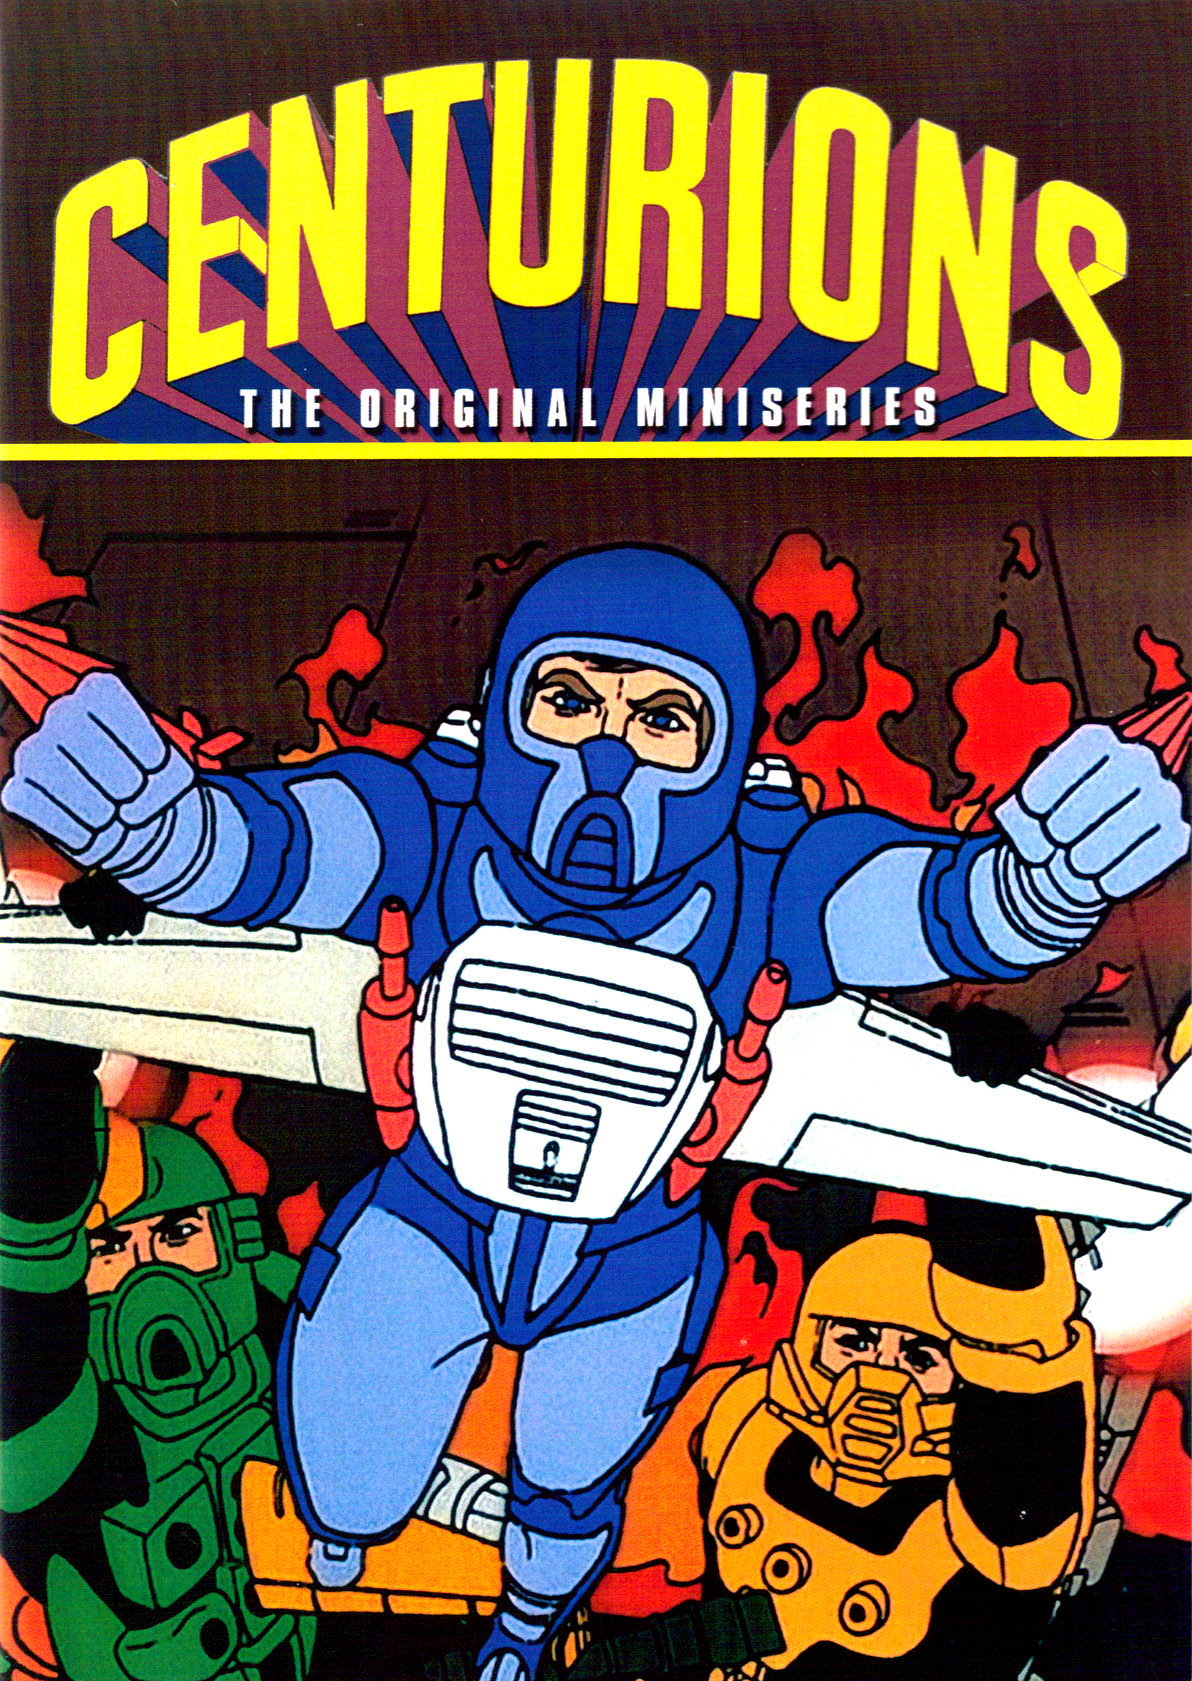 The Centurions is a 90s cartoon show